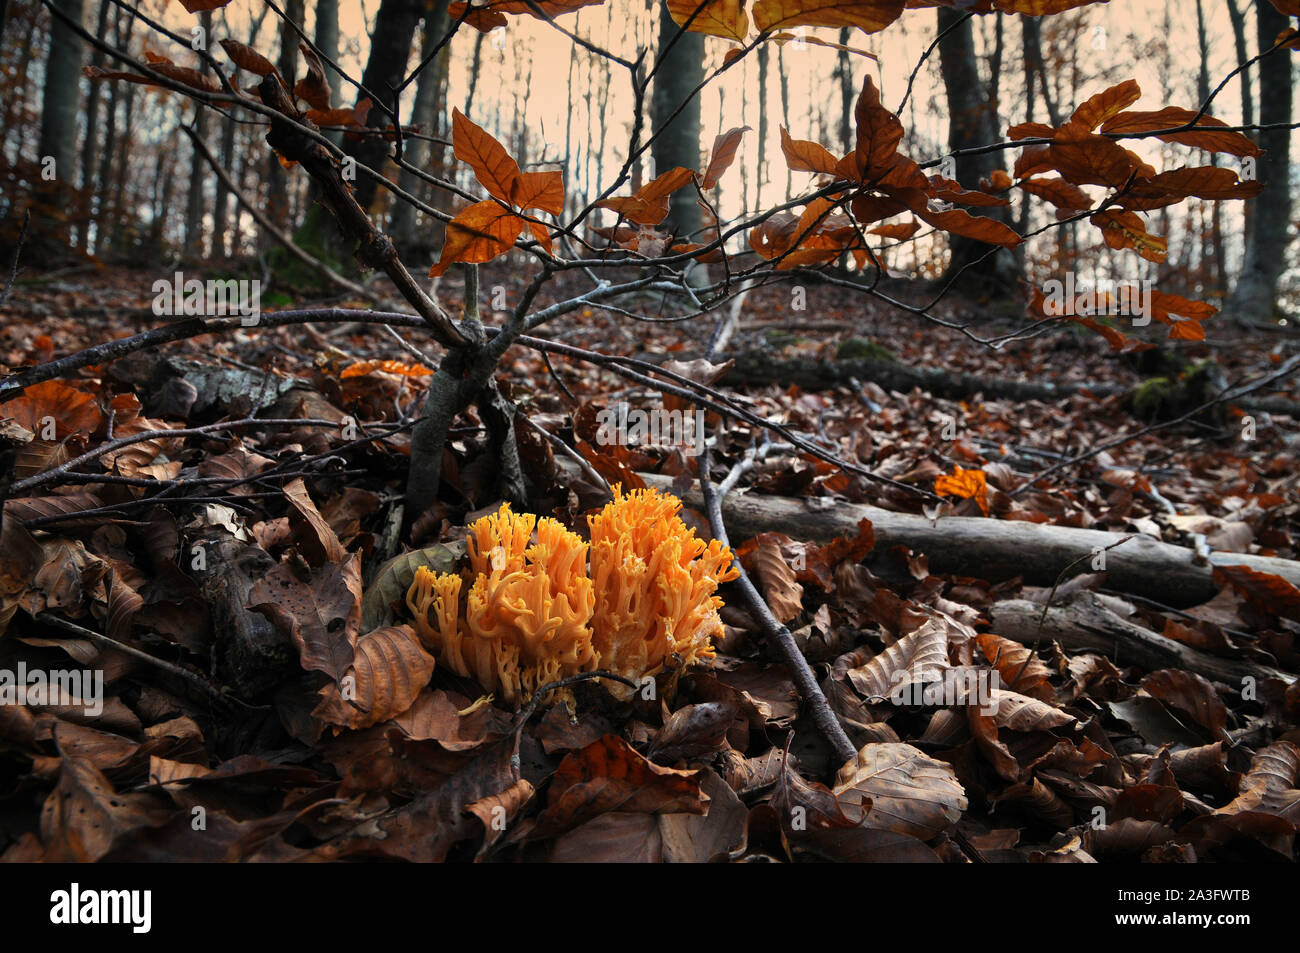 mushrooms, called Ramaria aurea in the forest during autumn season Stock Photo